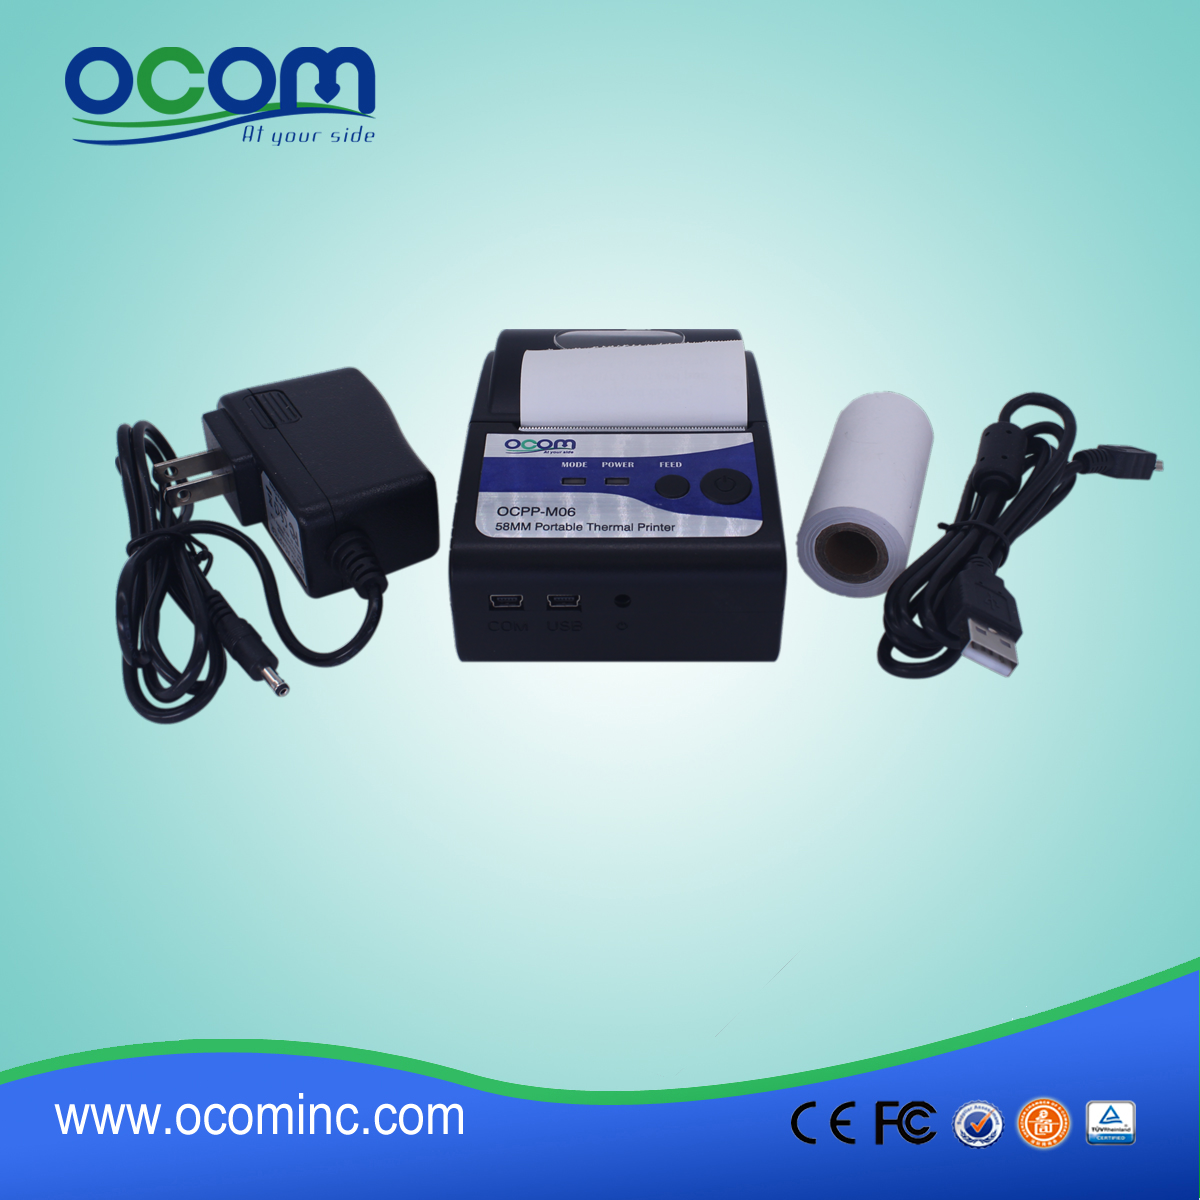 (OCPP-M06) OCOM Gorący sprzedaje android drukarki, drukarka USB, RS232 drukarki